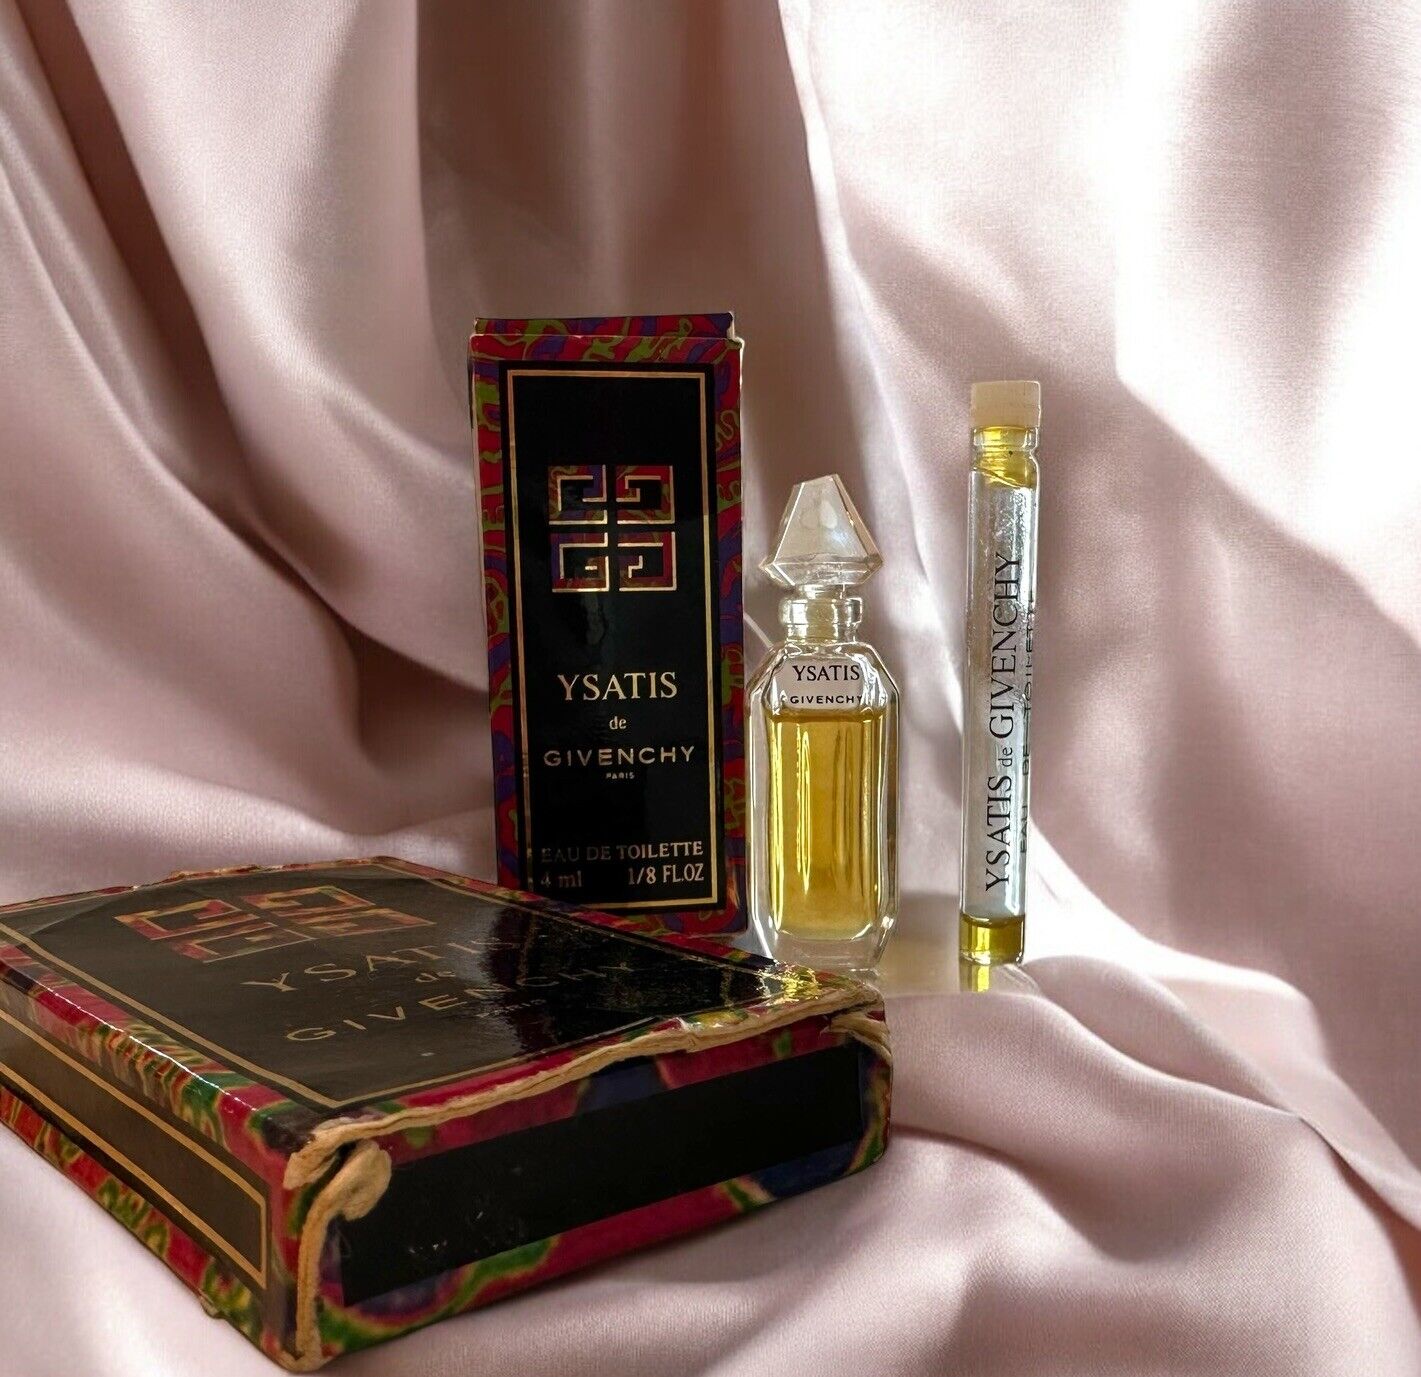 Vintage Givenchy OG Ysatis Mini 4 ml Perfume Bottle & Box Samples Collectables